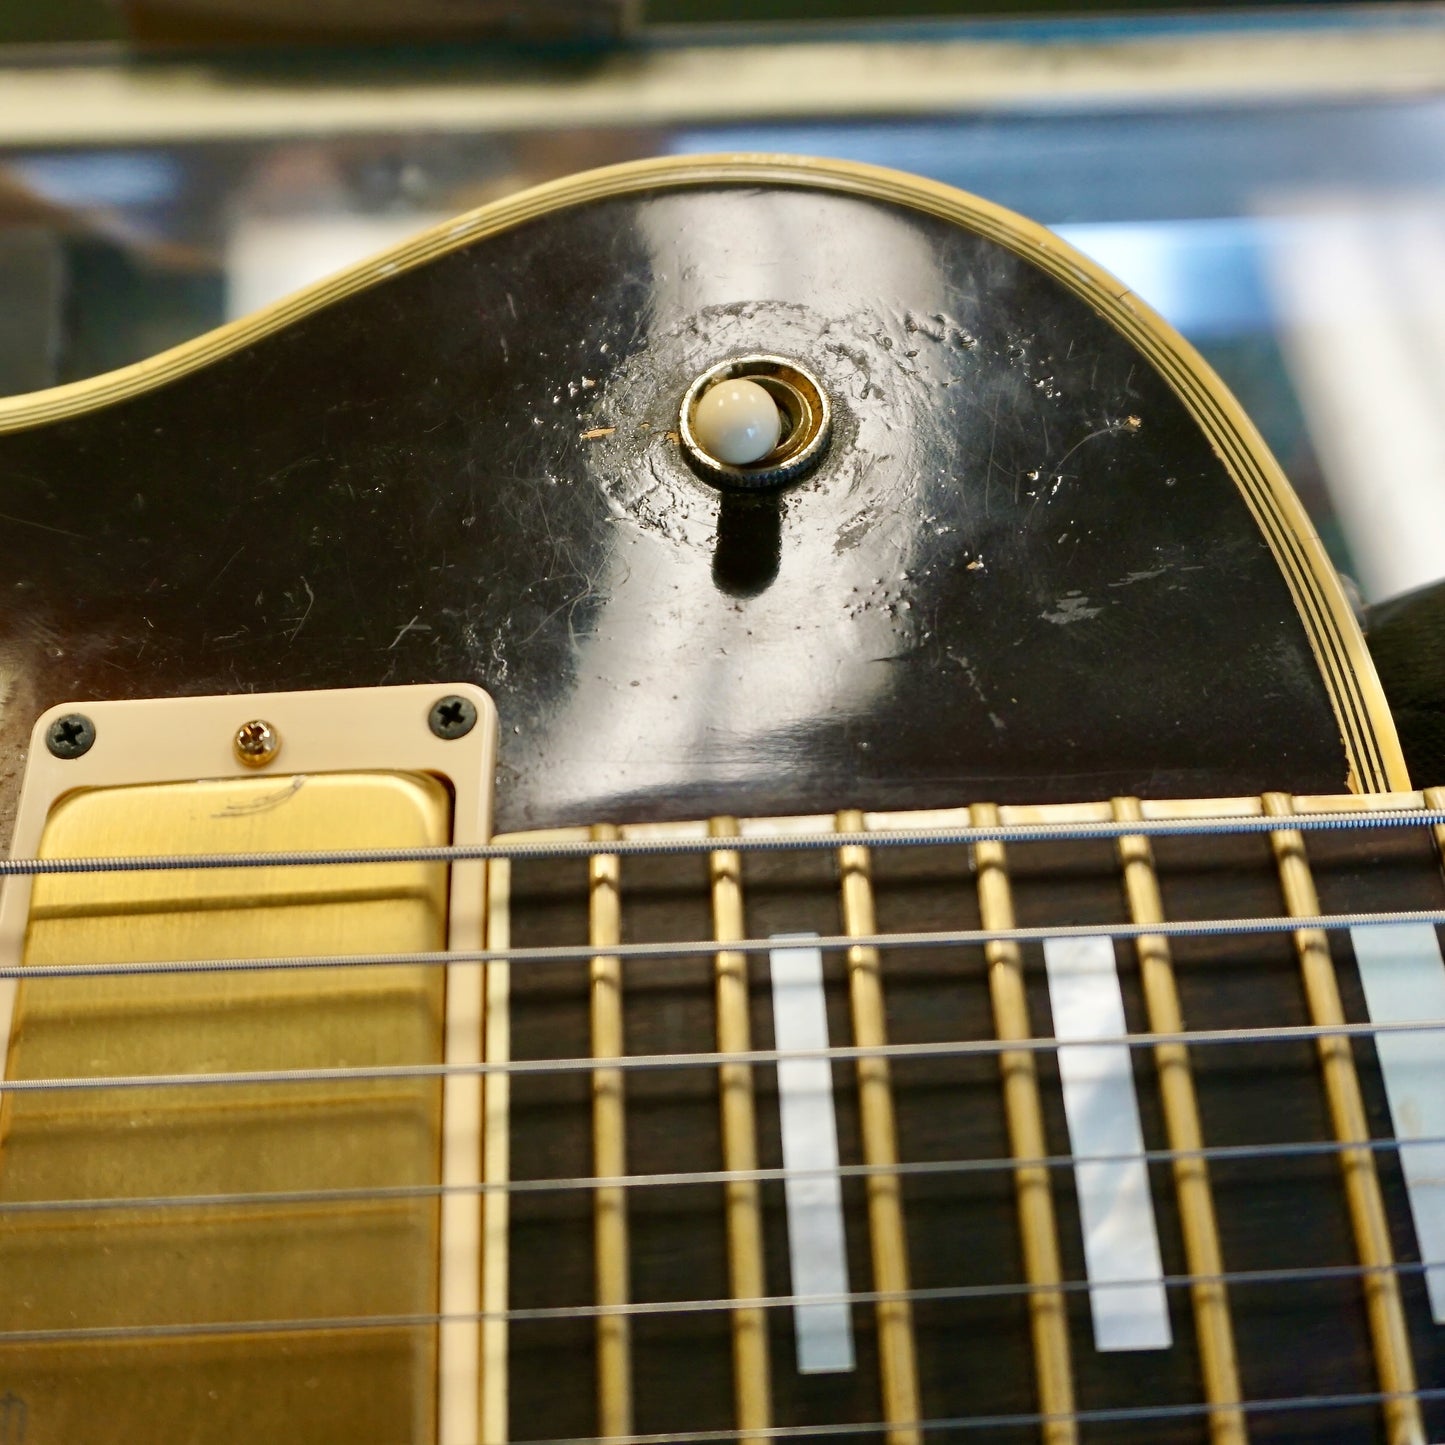 Gibson Les Paul Custom 1980 w/ EMG Pickups